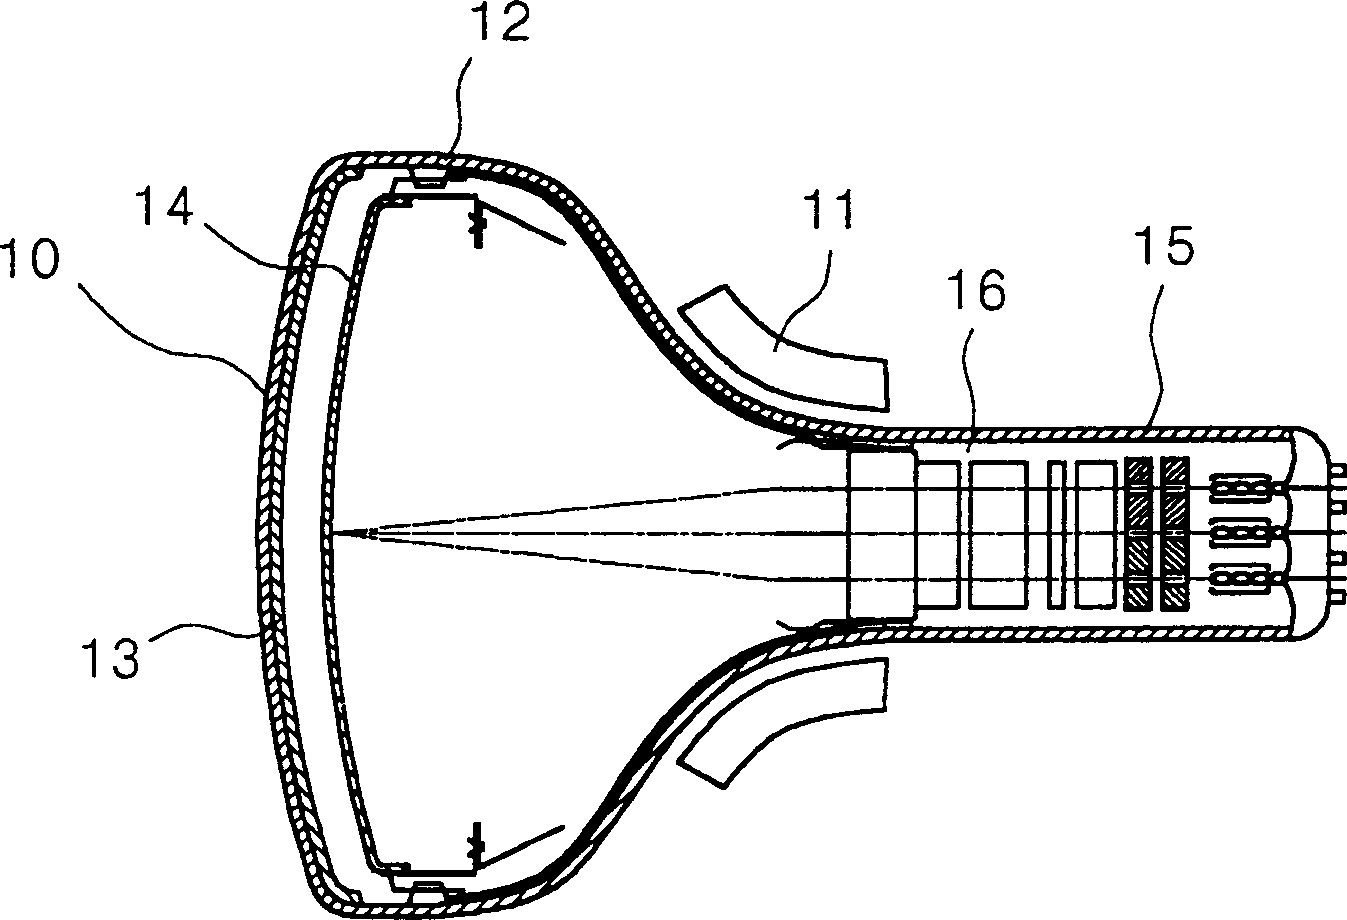 Cathode-ray tube